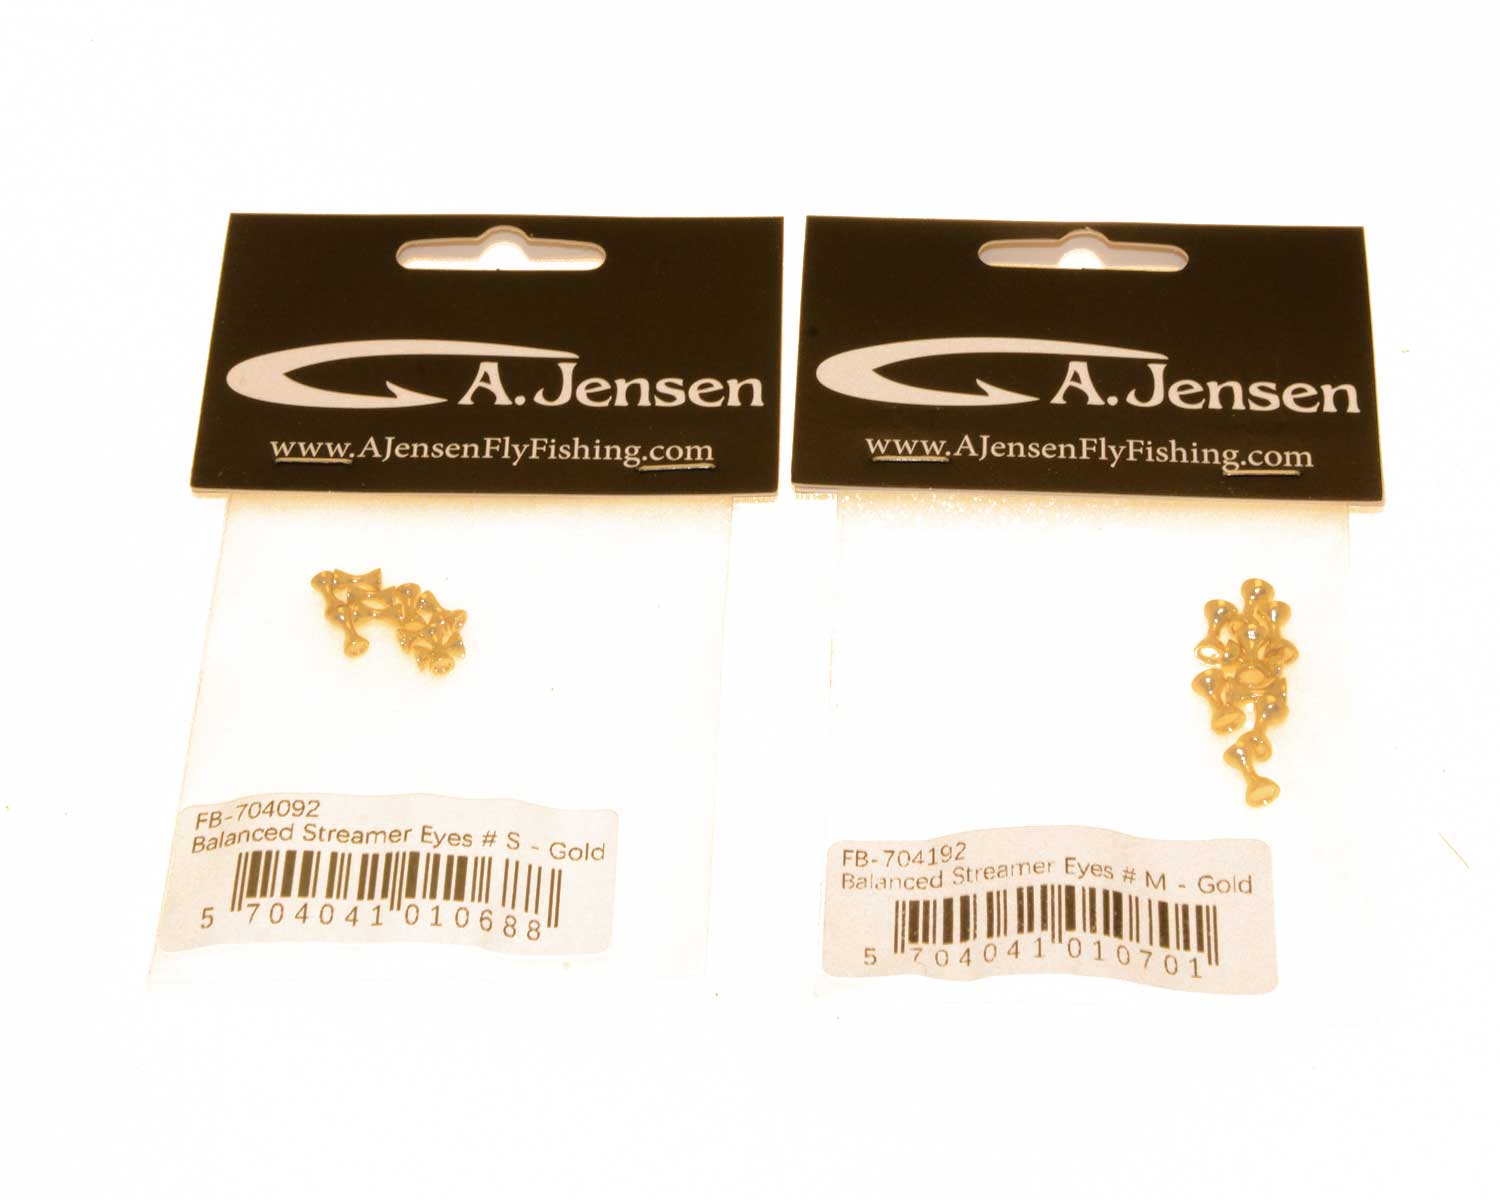 A.Jensen Balanced Streamer Eyes Gold combo - 1 of each 2 sizes